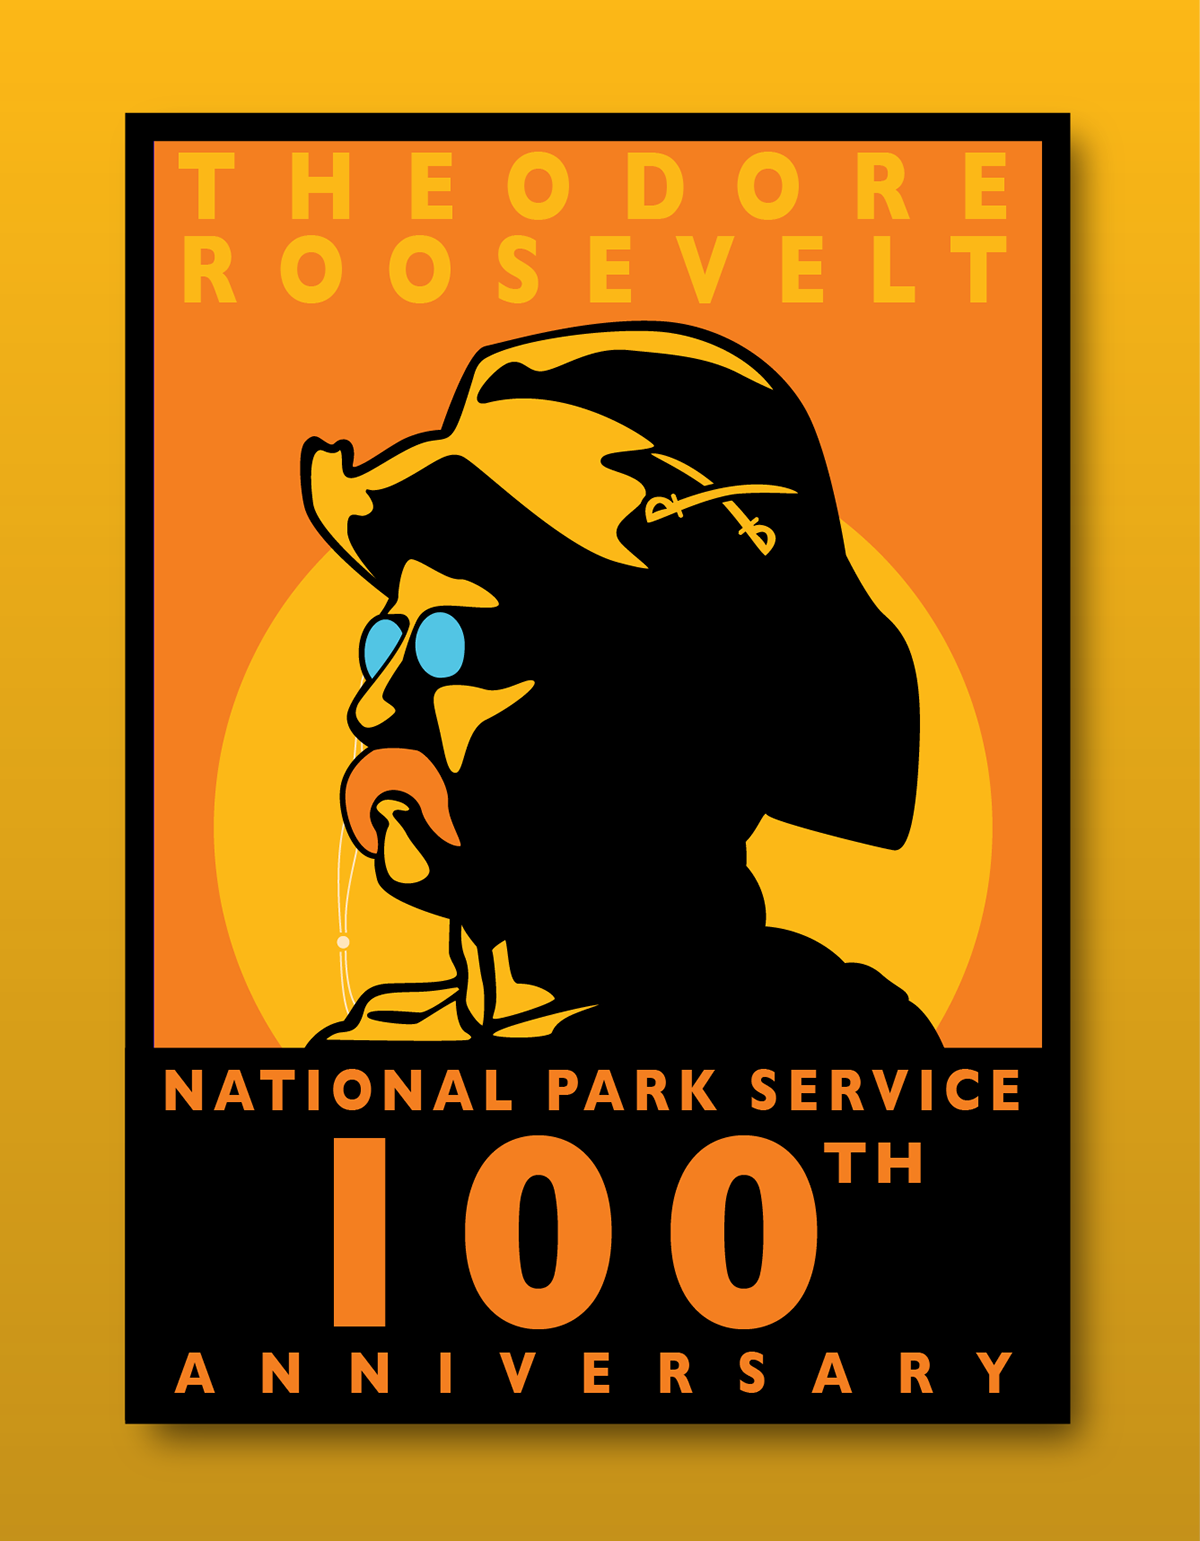 National Parks Service Digital Art  ILLUSTRATION  Theodore Roosevelt smokey bear Woodrow Wilson